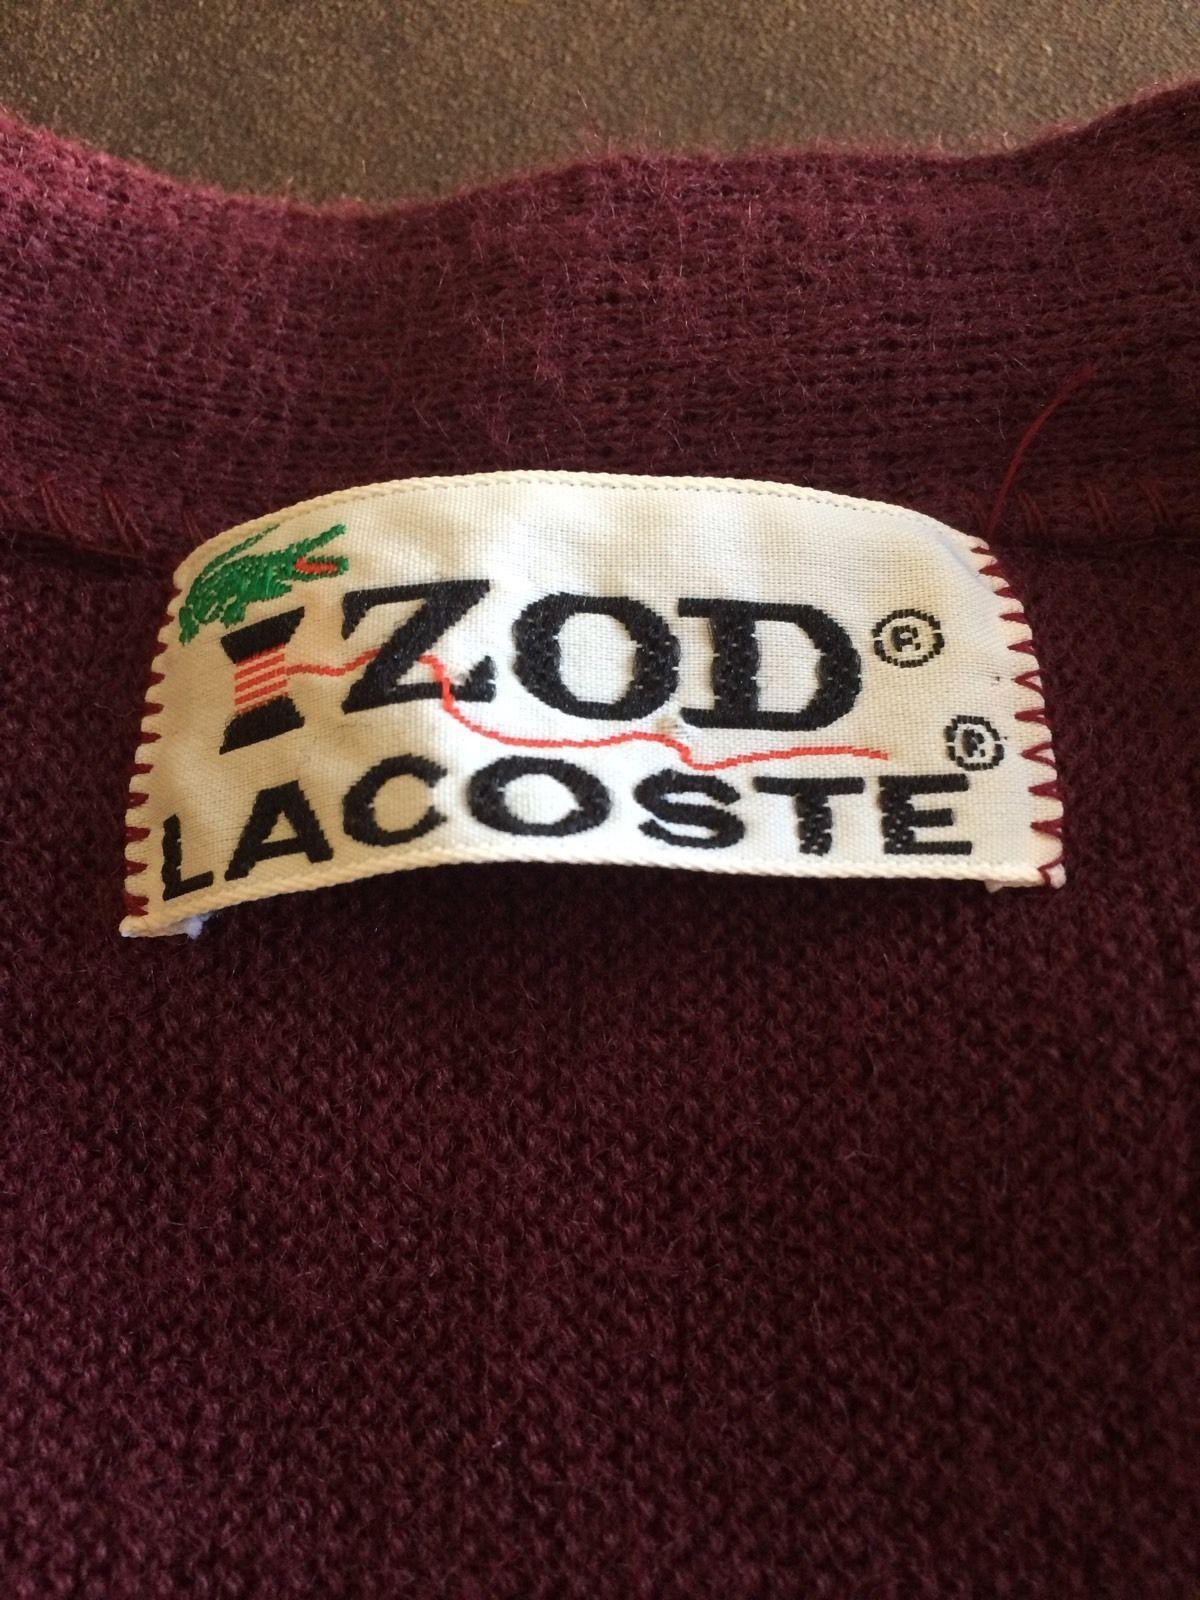 vintage izod lacoste labels